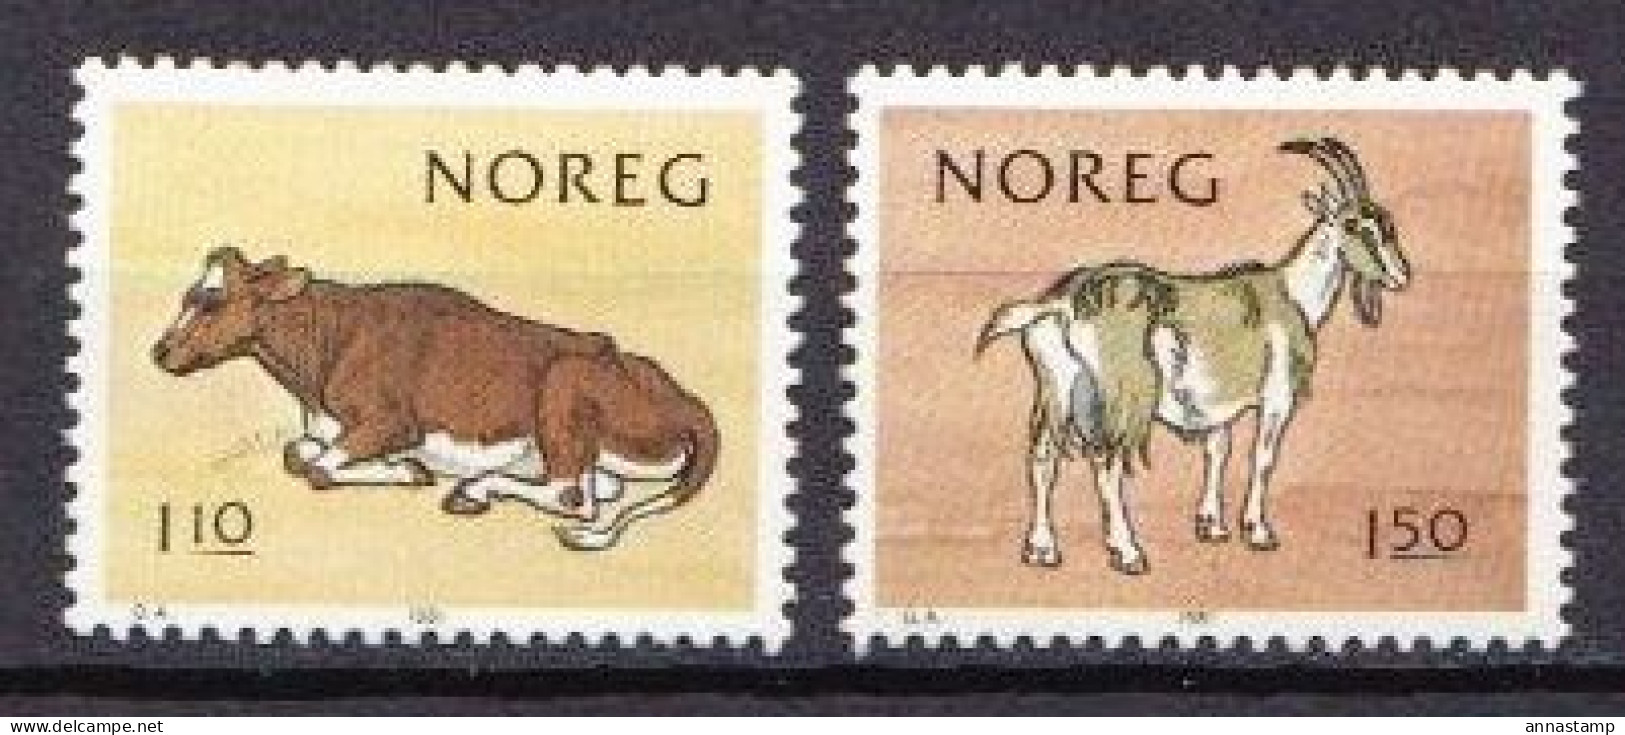 Norway MNH Set - Fattoria